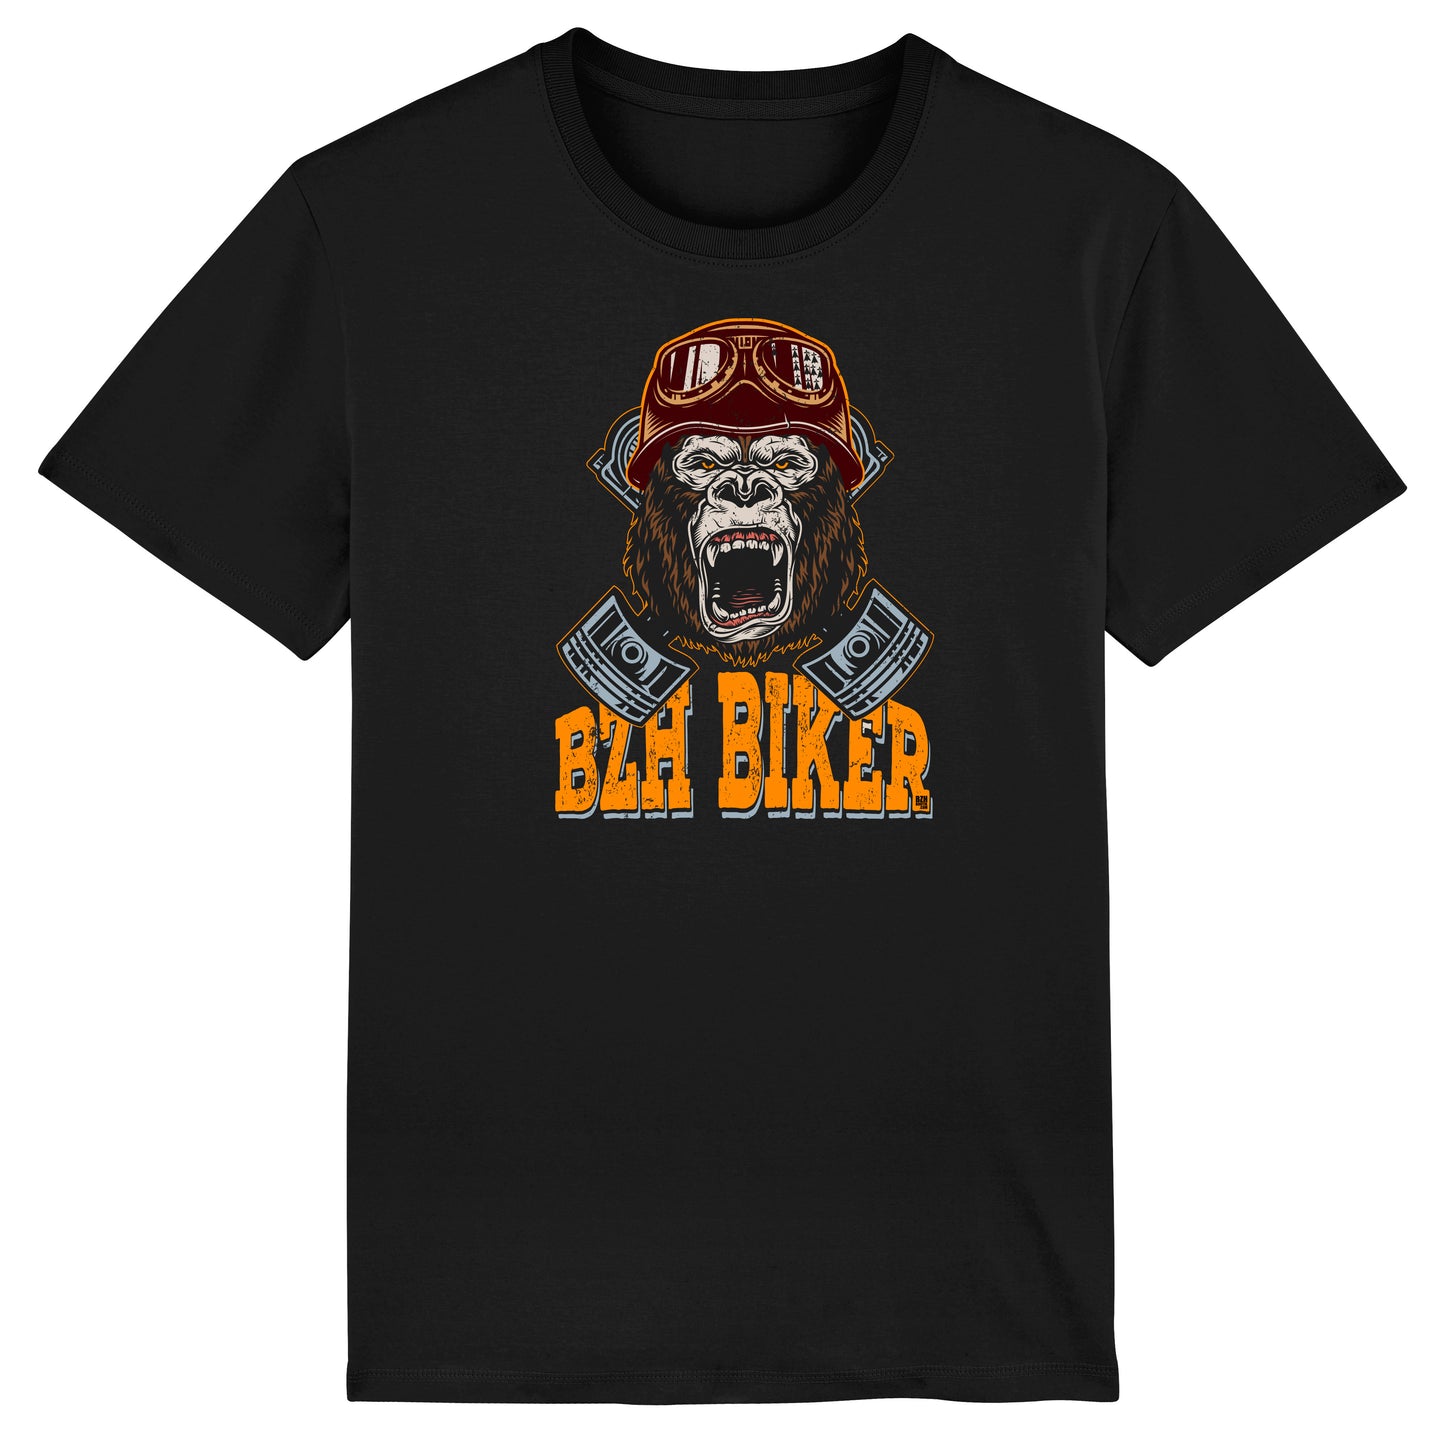 T-shirt bzh biker gorille casqué